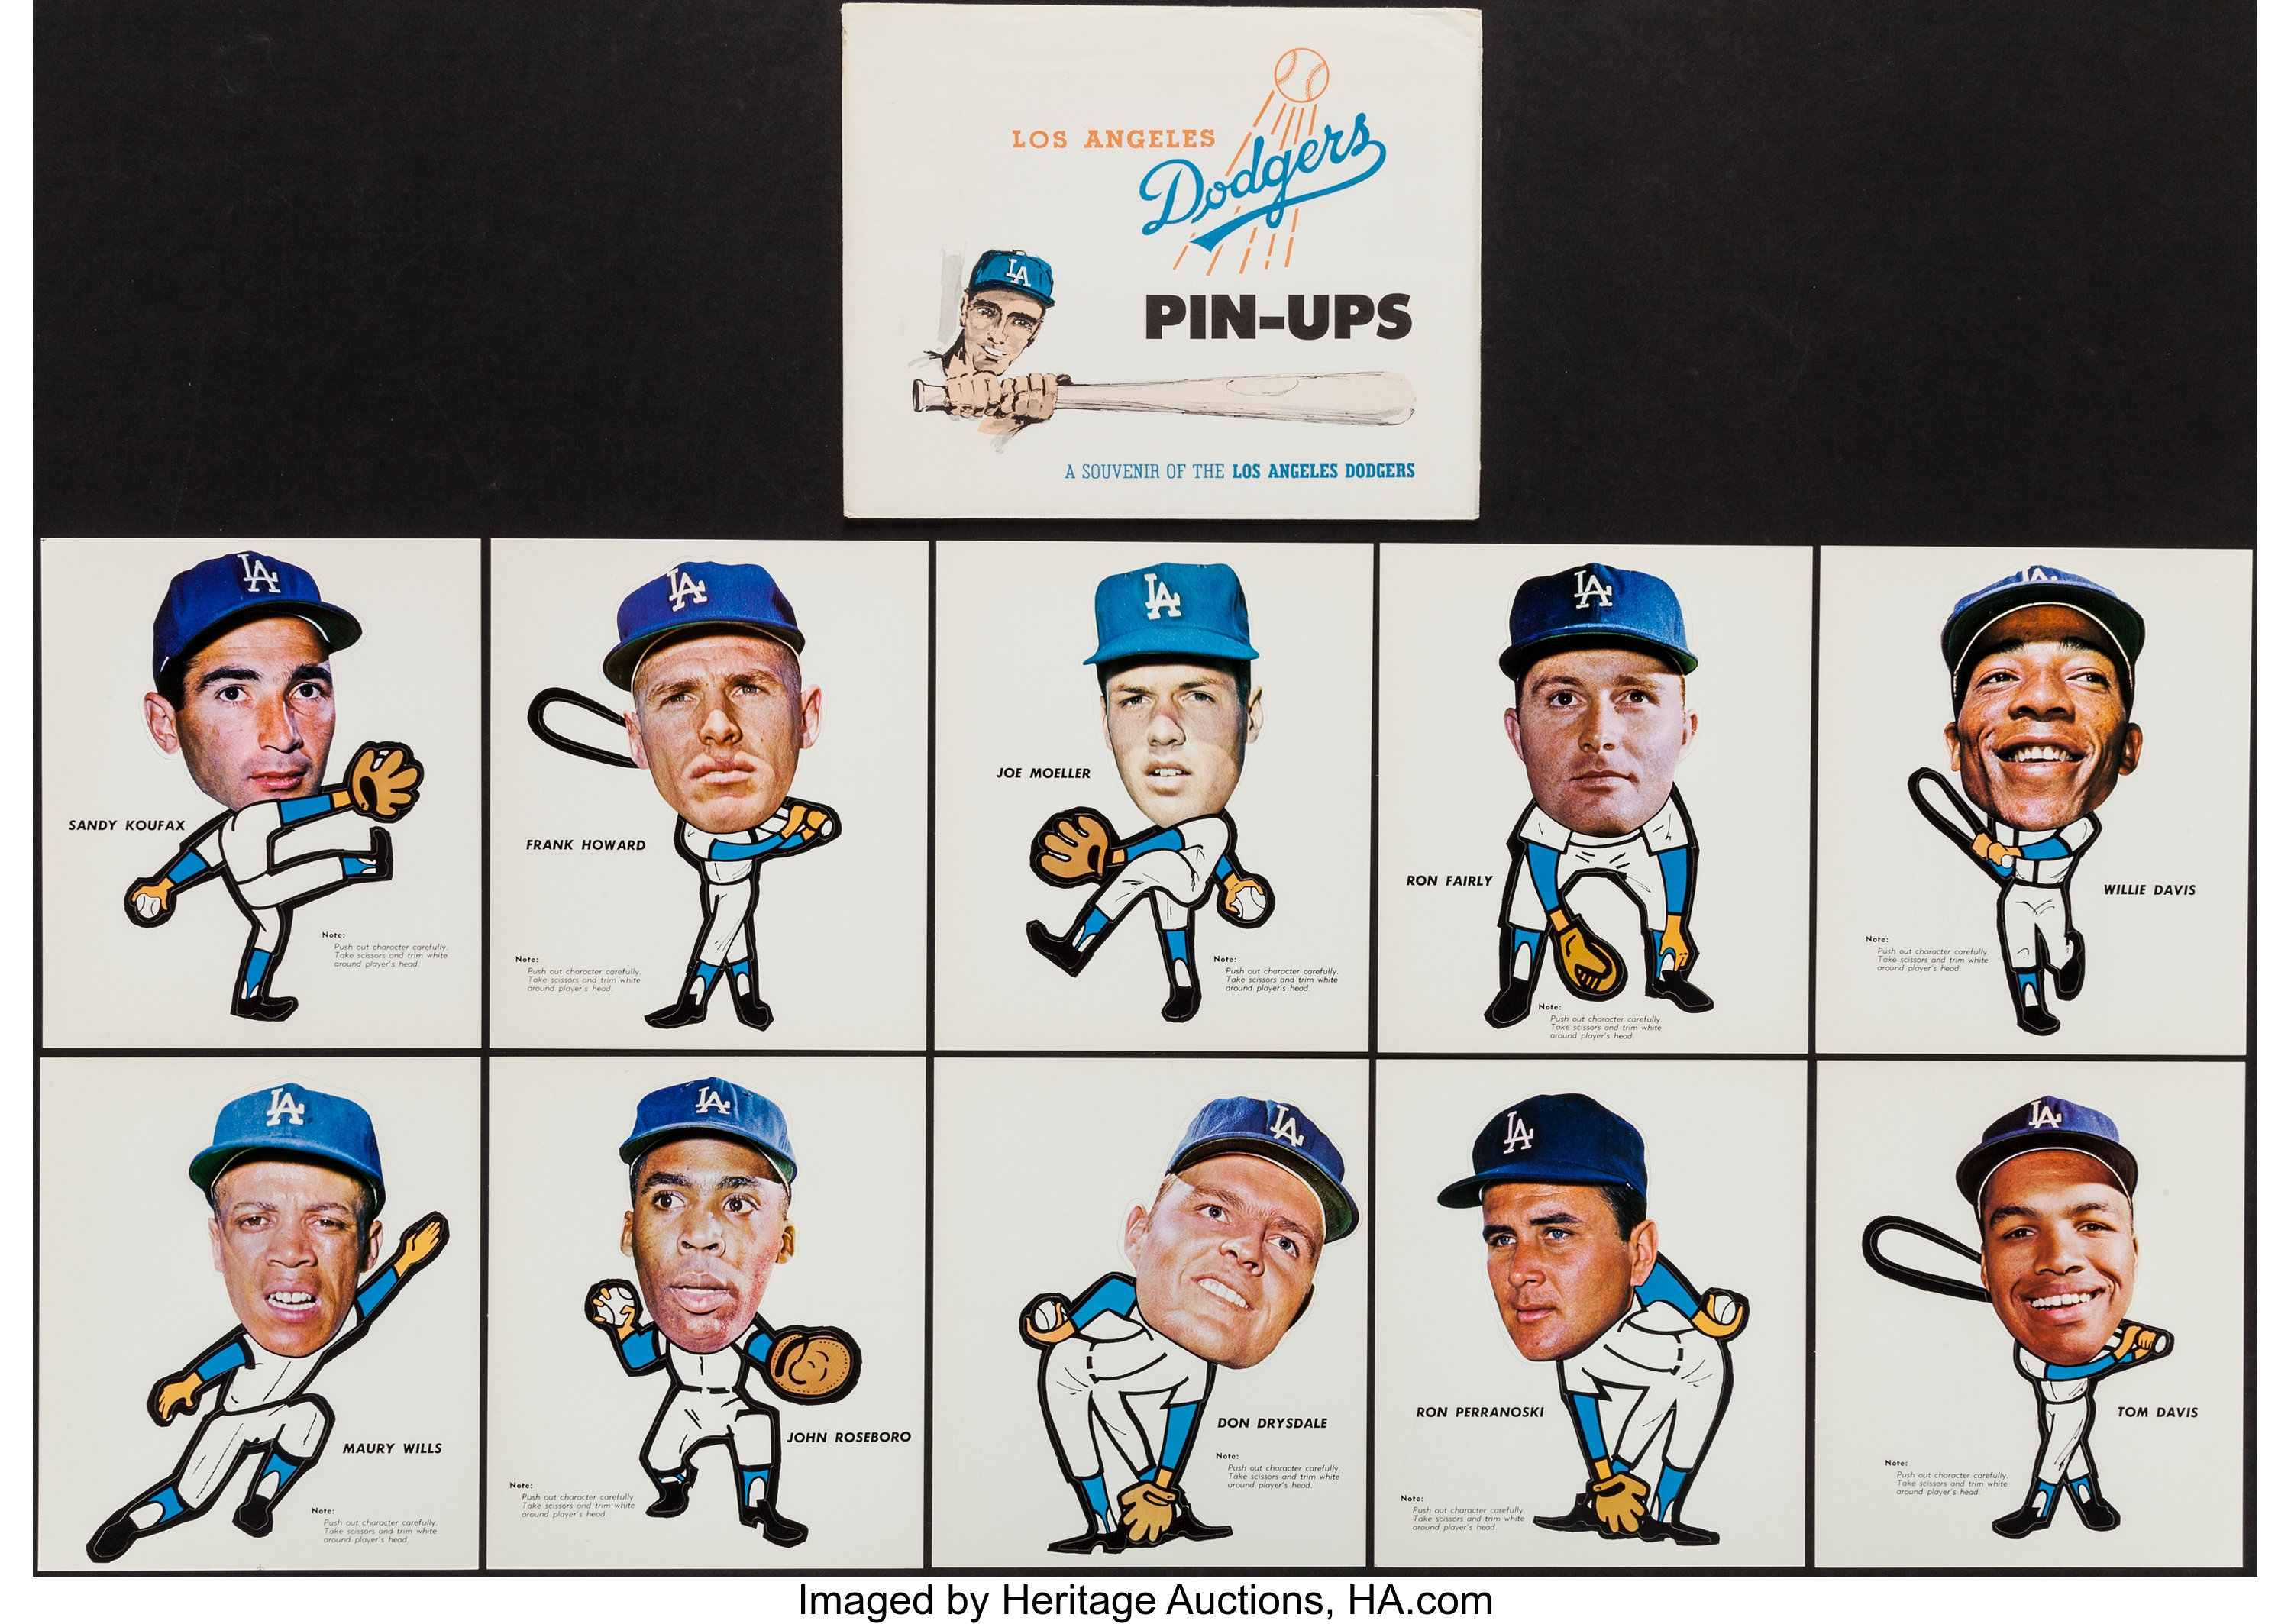 Lot Detail - Sandy Koufax Signed Framed 1963 Los Angeles Dodgers